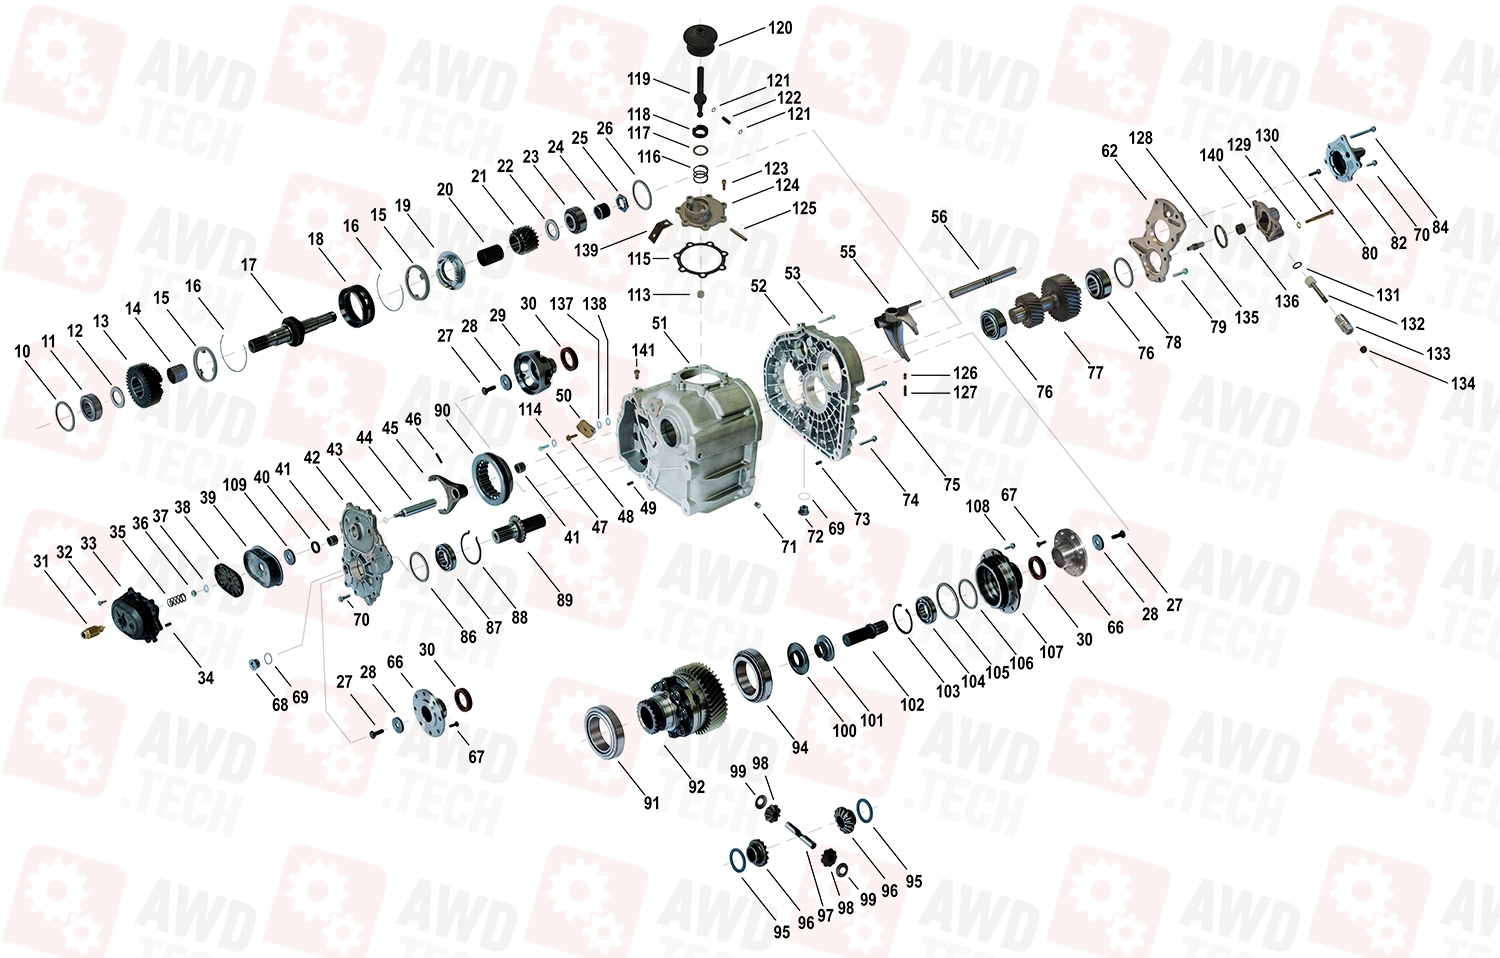 VG150 Transfer Case schema - repair / rebuild / overhaul parts 